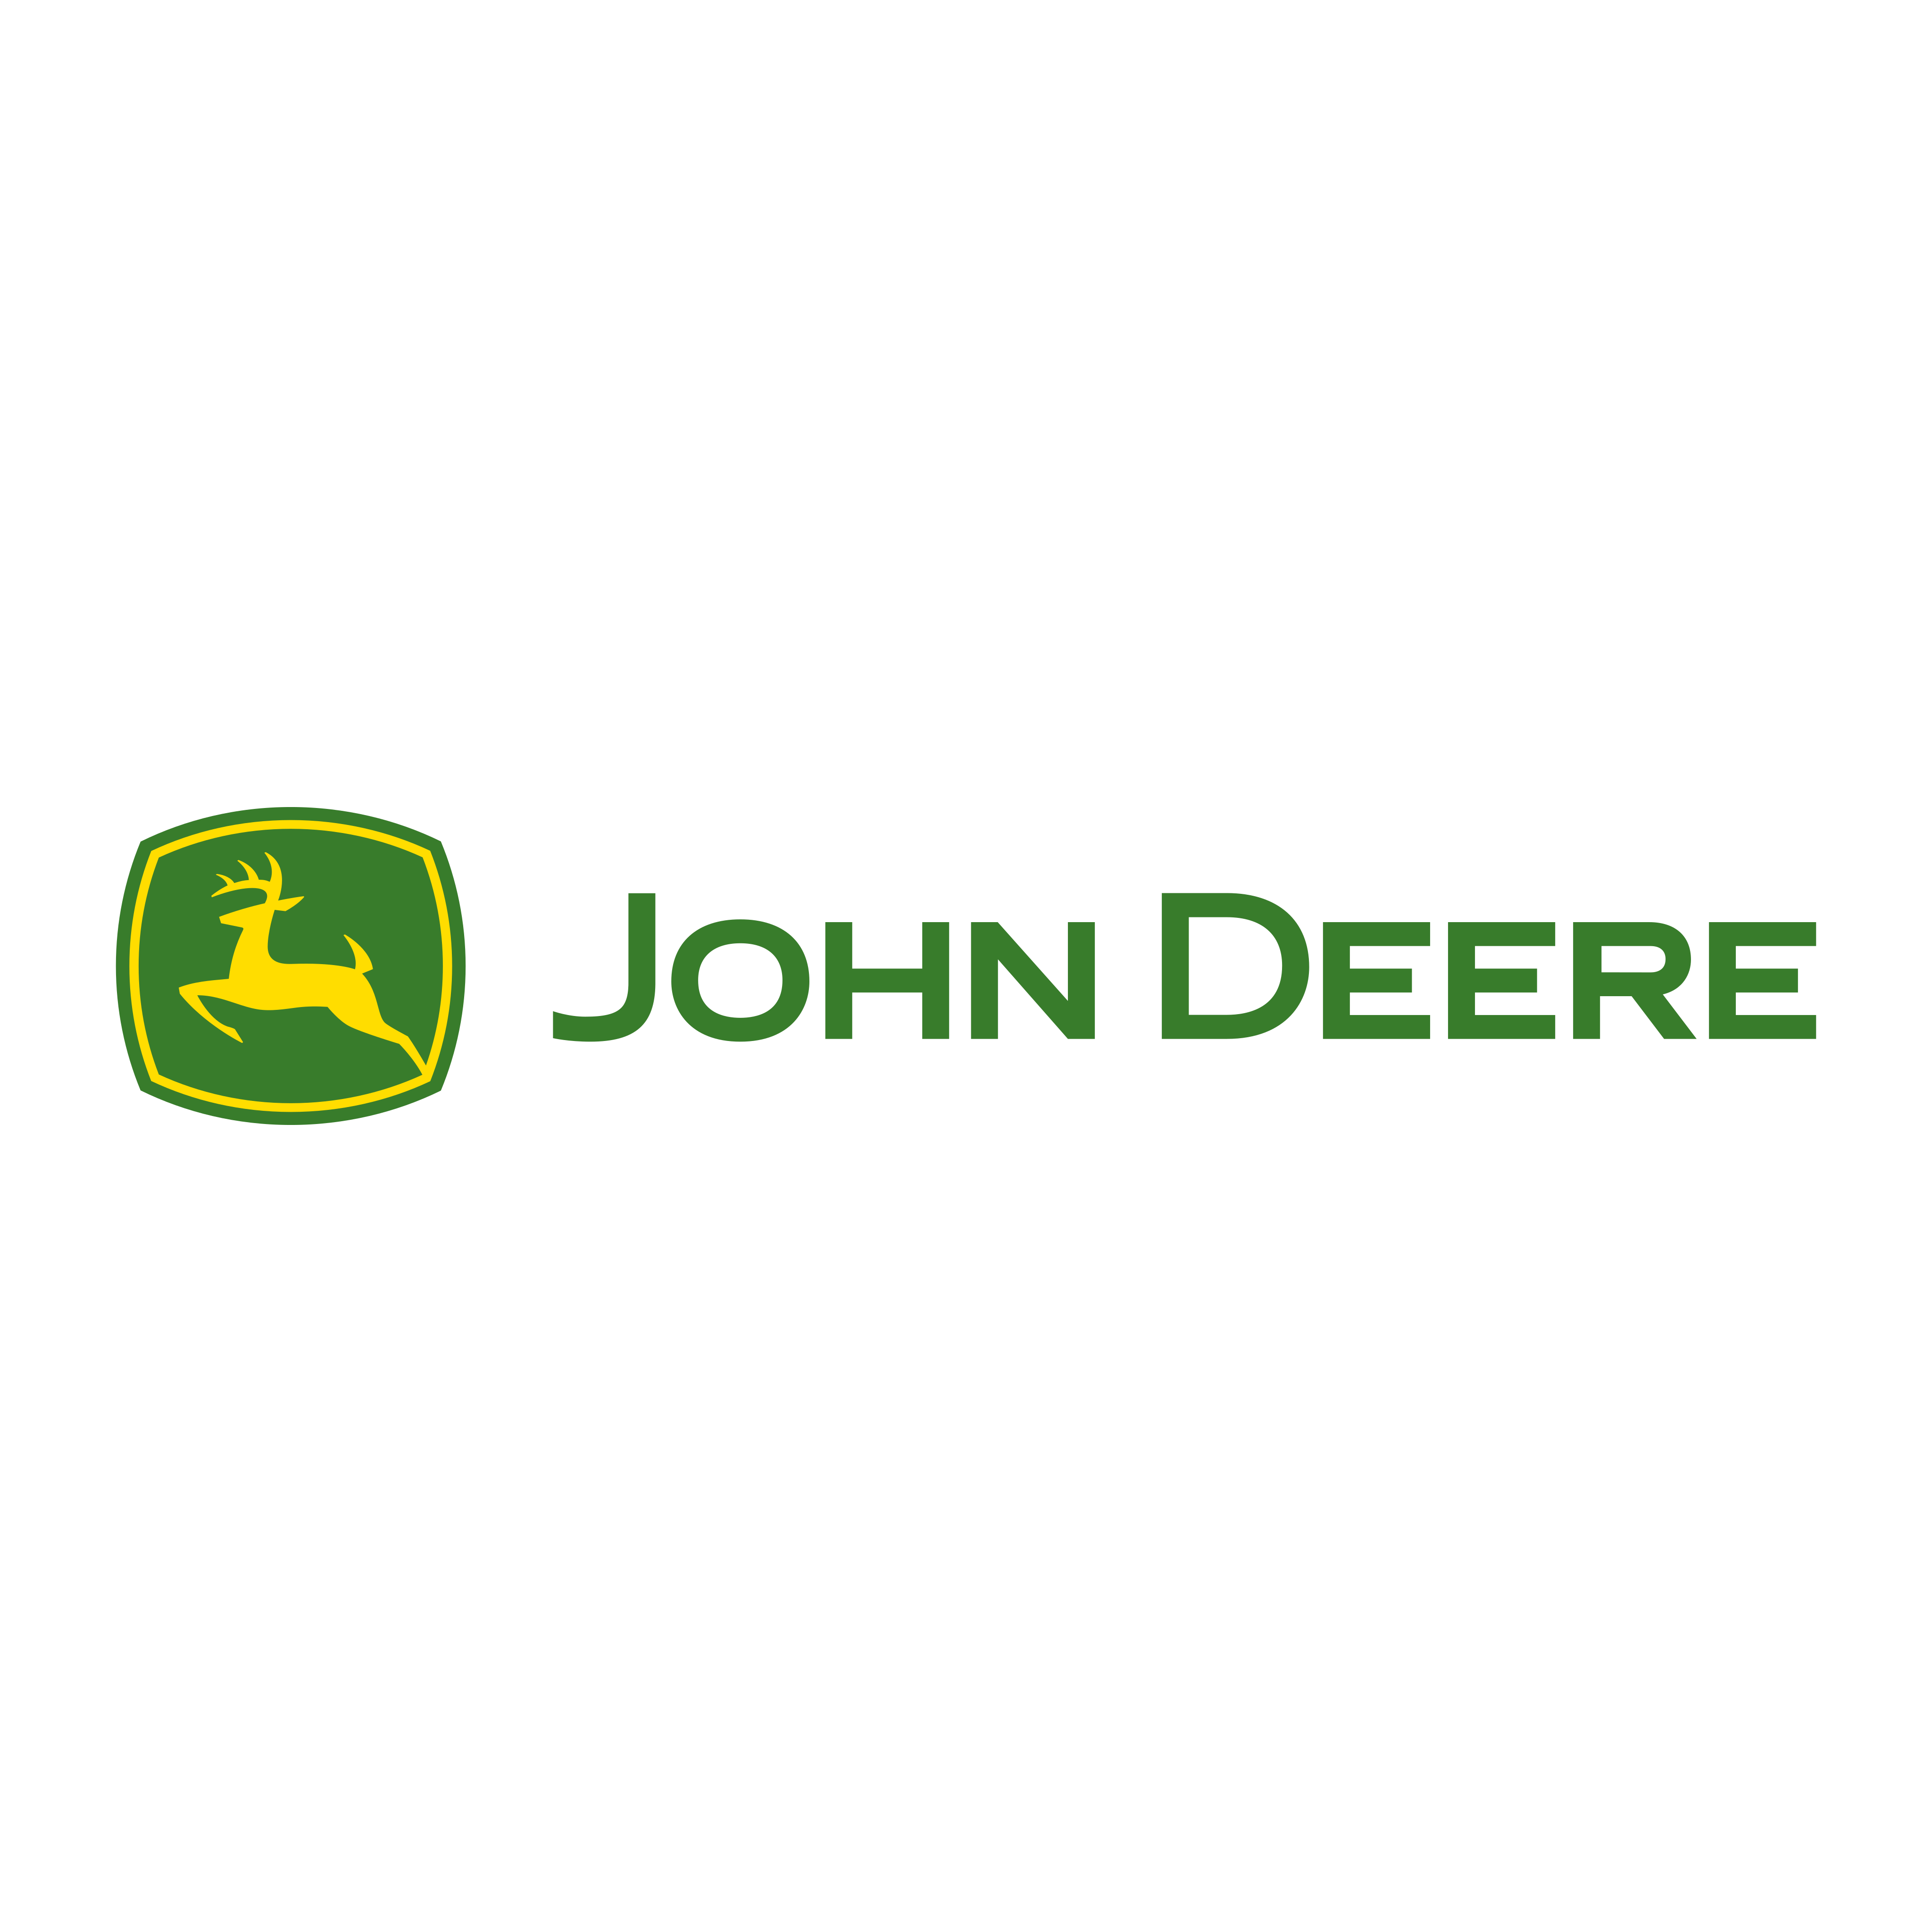 john deere logo 0 - John Deere Logo